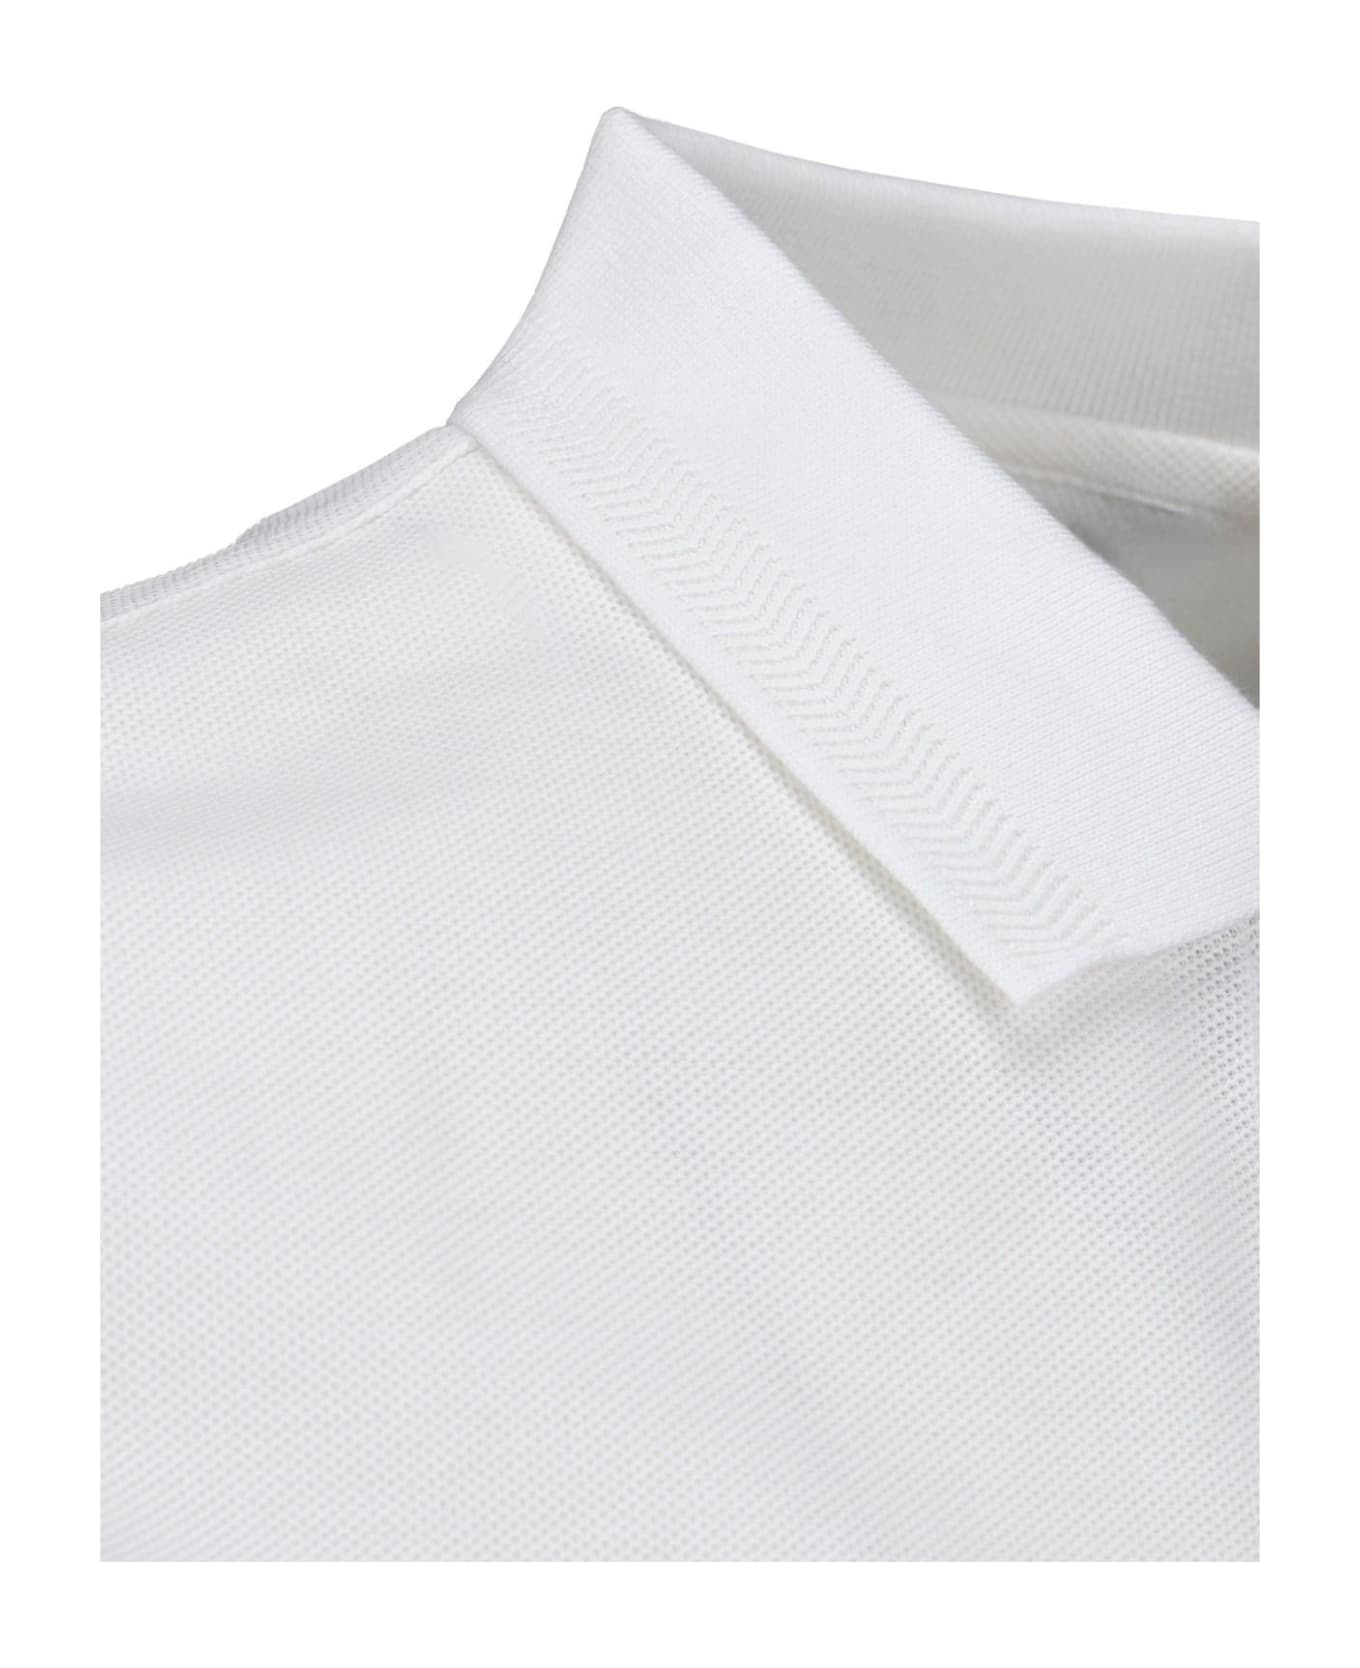 Burberry Logo Polo Shirt - WHITE シャツ